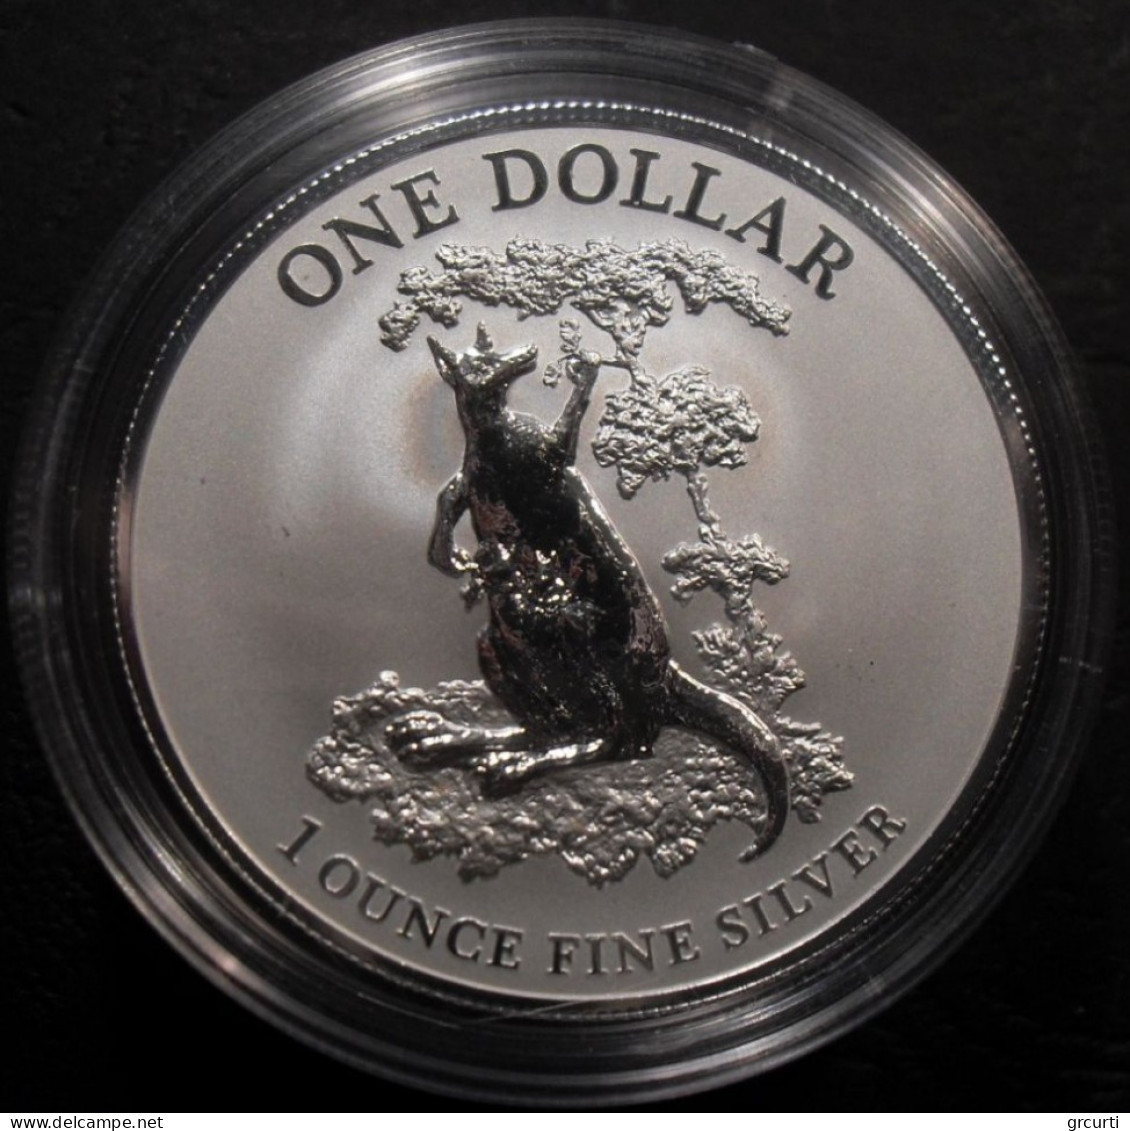 Australia - 1 Dollar 2015 - Canguro - UC# 241 - Silver Bullions